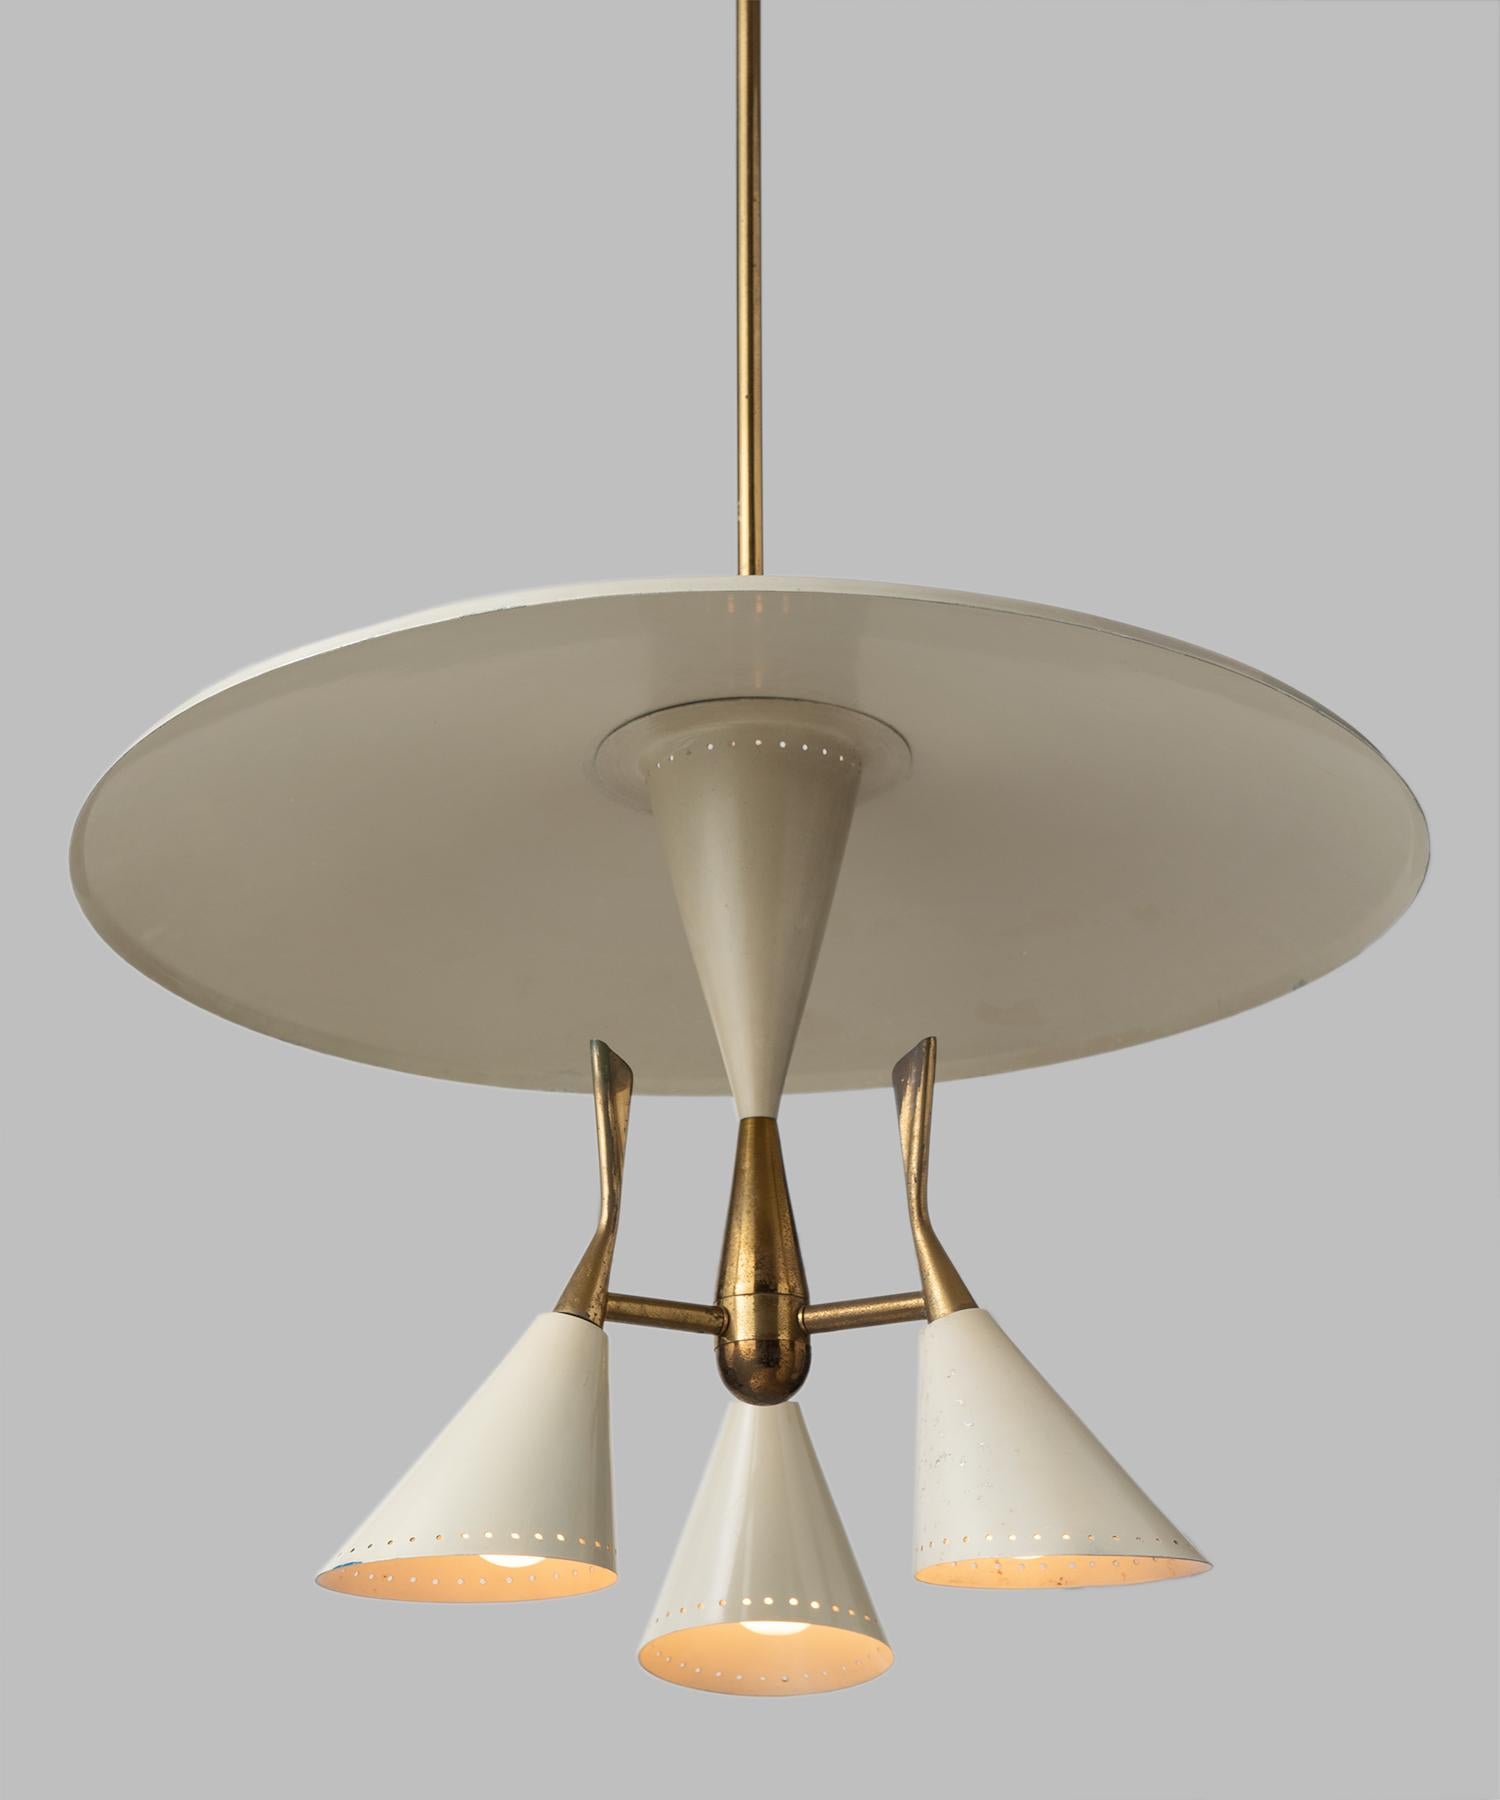 Italian Cream & Brass Ceiling Lamp, Italy, circa 1930